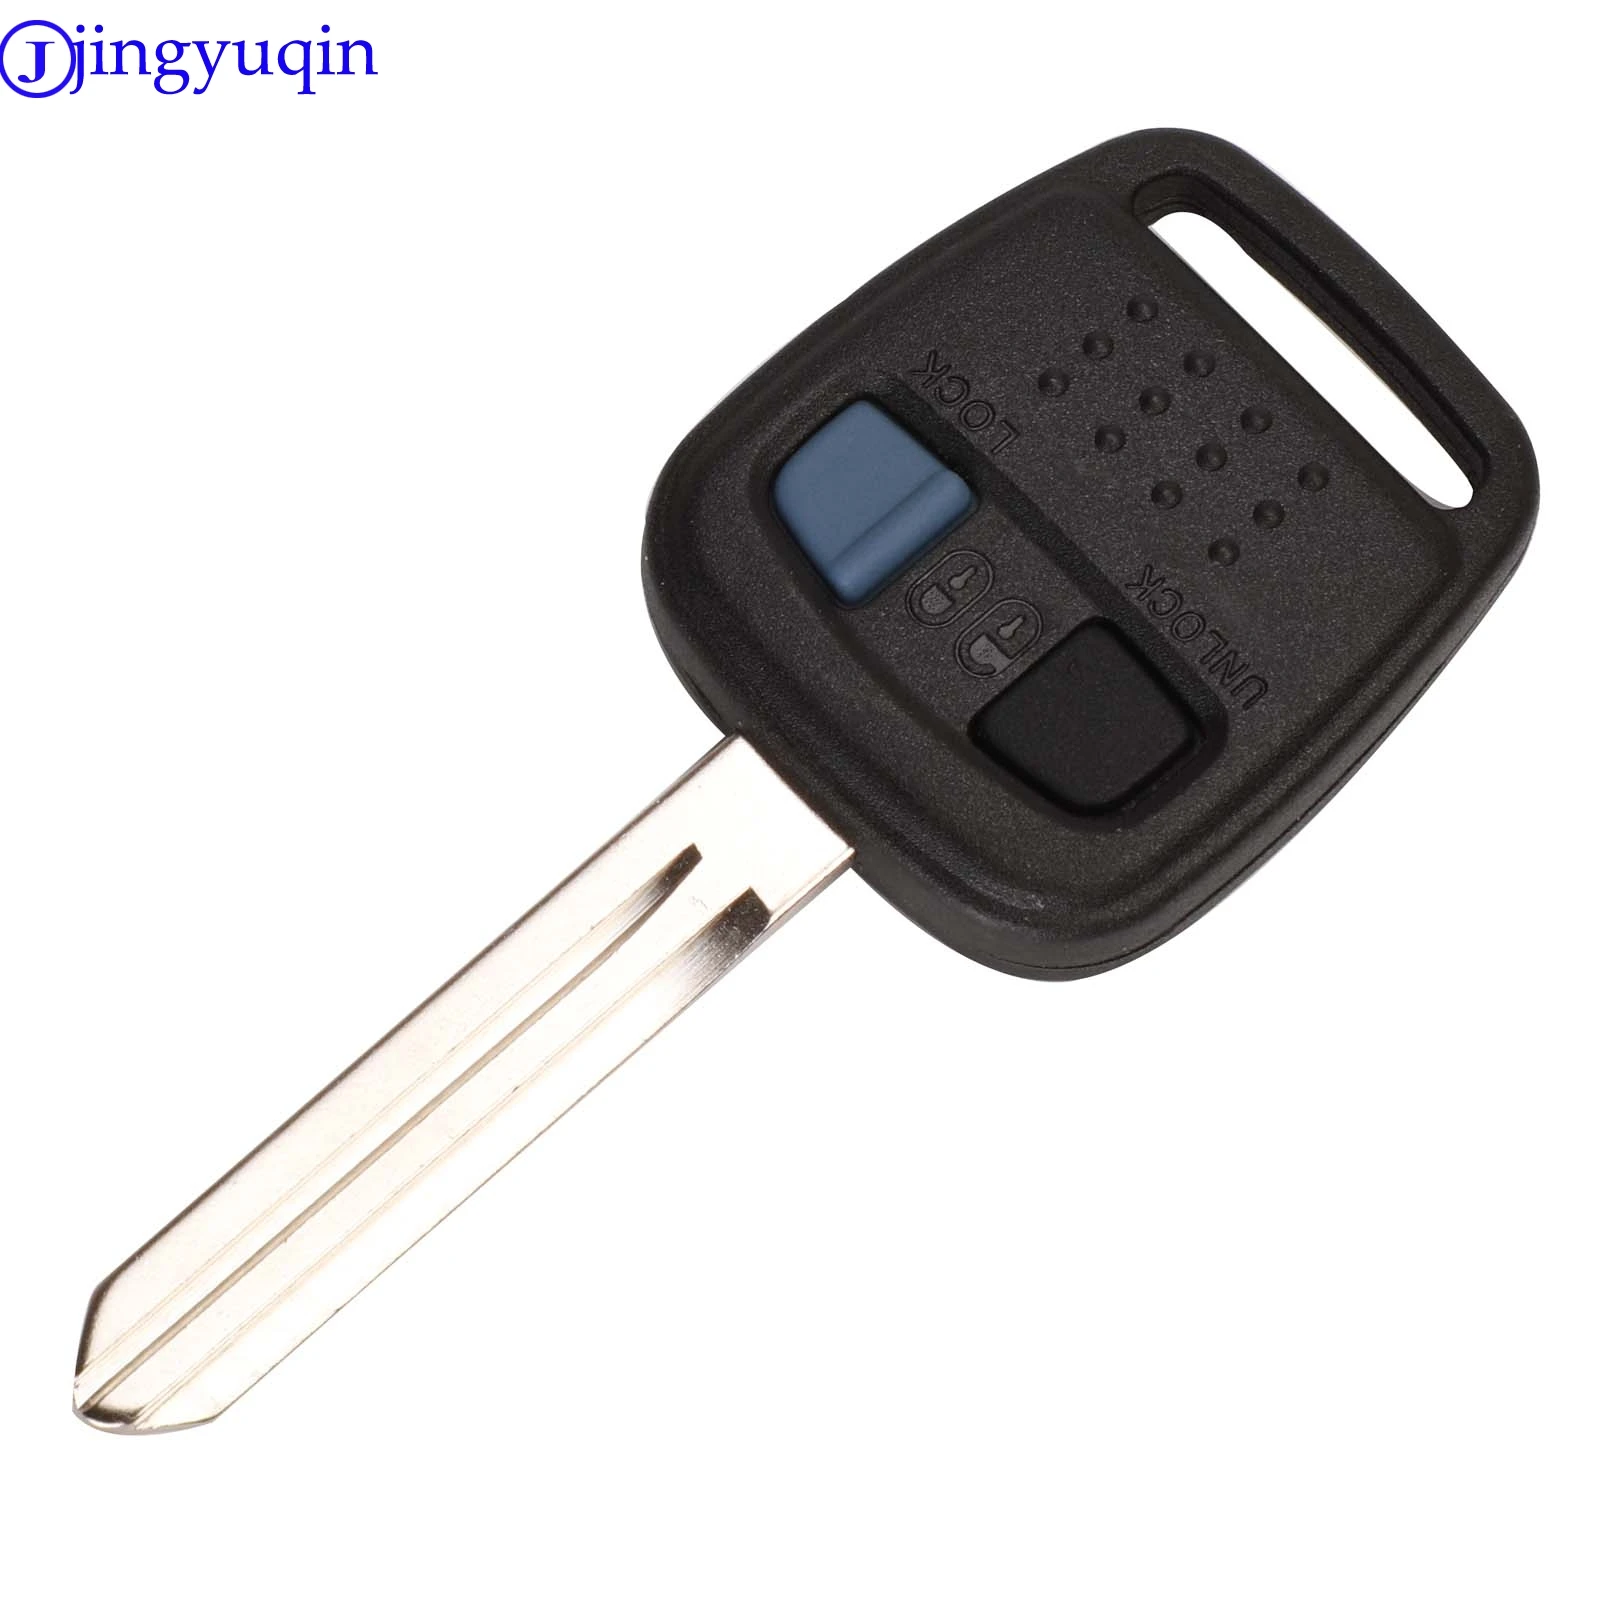 Jingyuqin 10 шт. чехол для дистанционного ключа от машины 2 кнопки чехол Fob для Nissan Bluebird ключи пустой корпус крышка